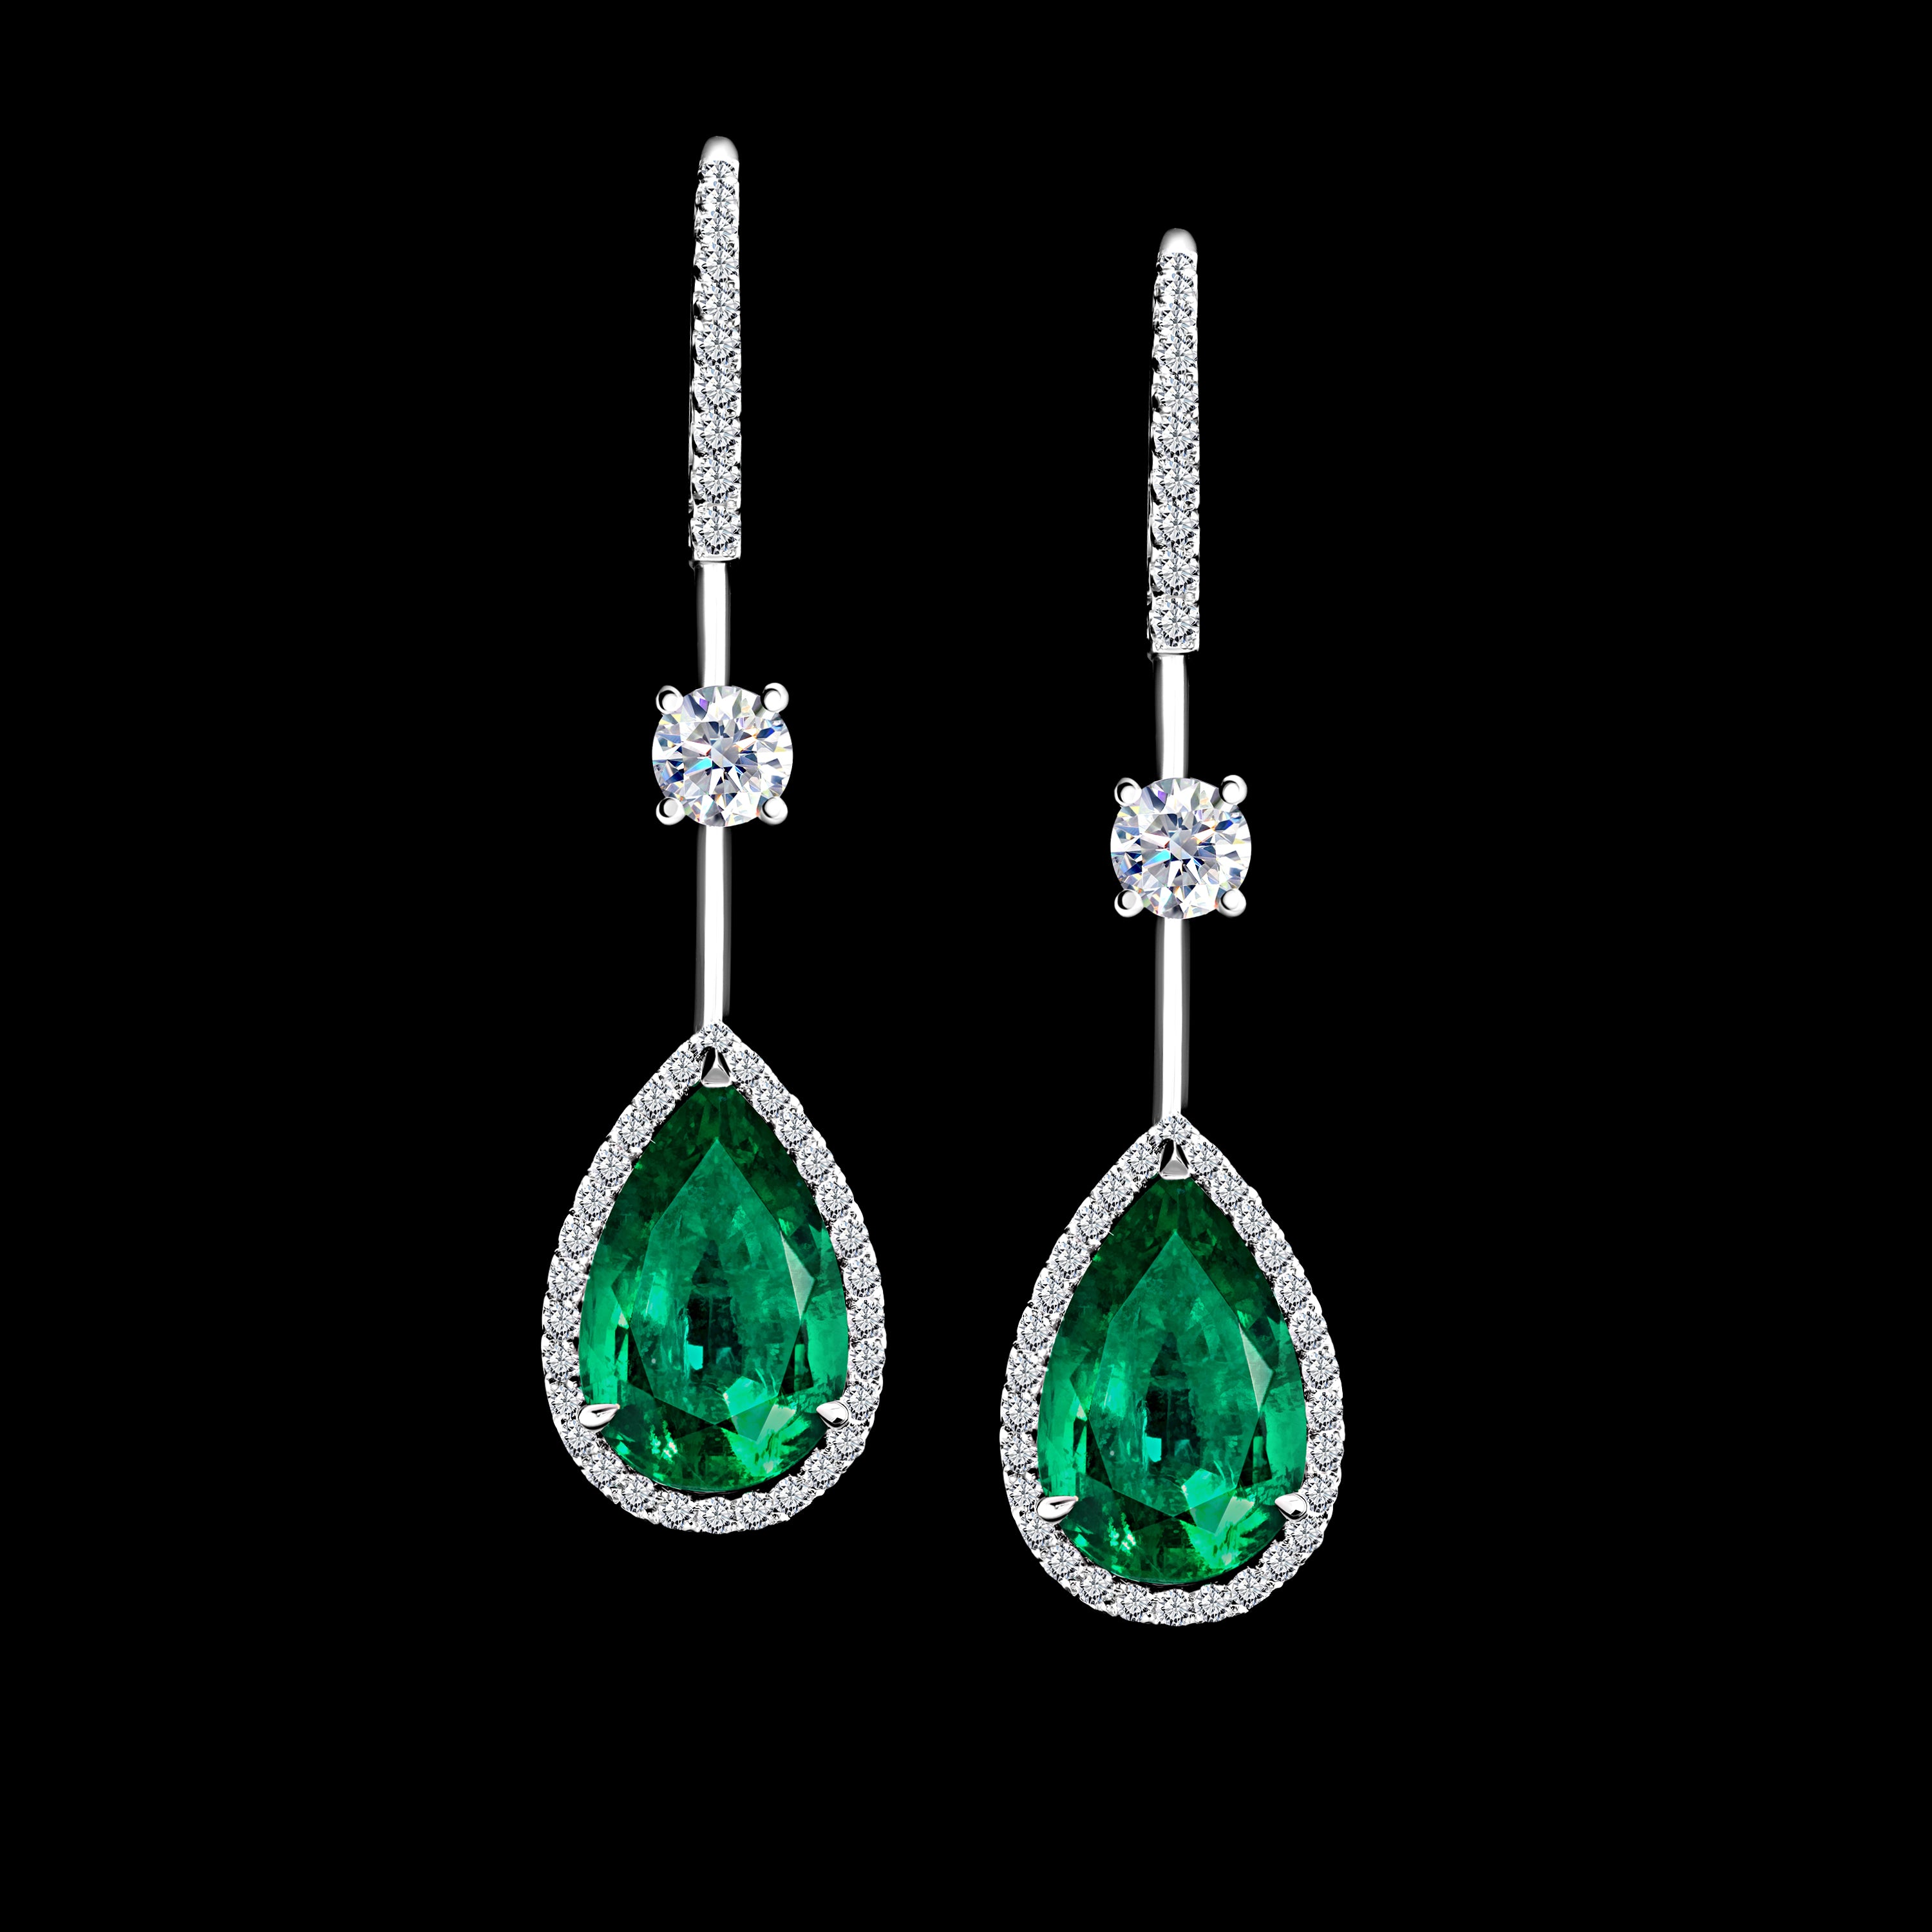 Emerald Drop Earrings with Diamonds - 6.68ct TW